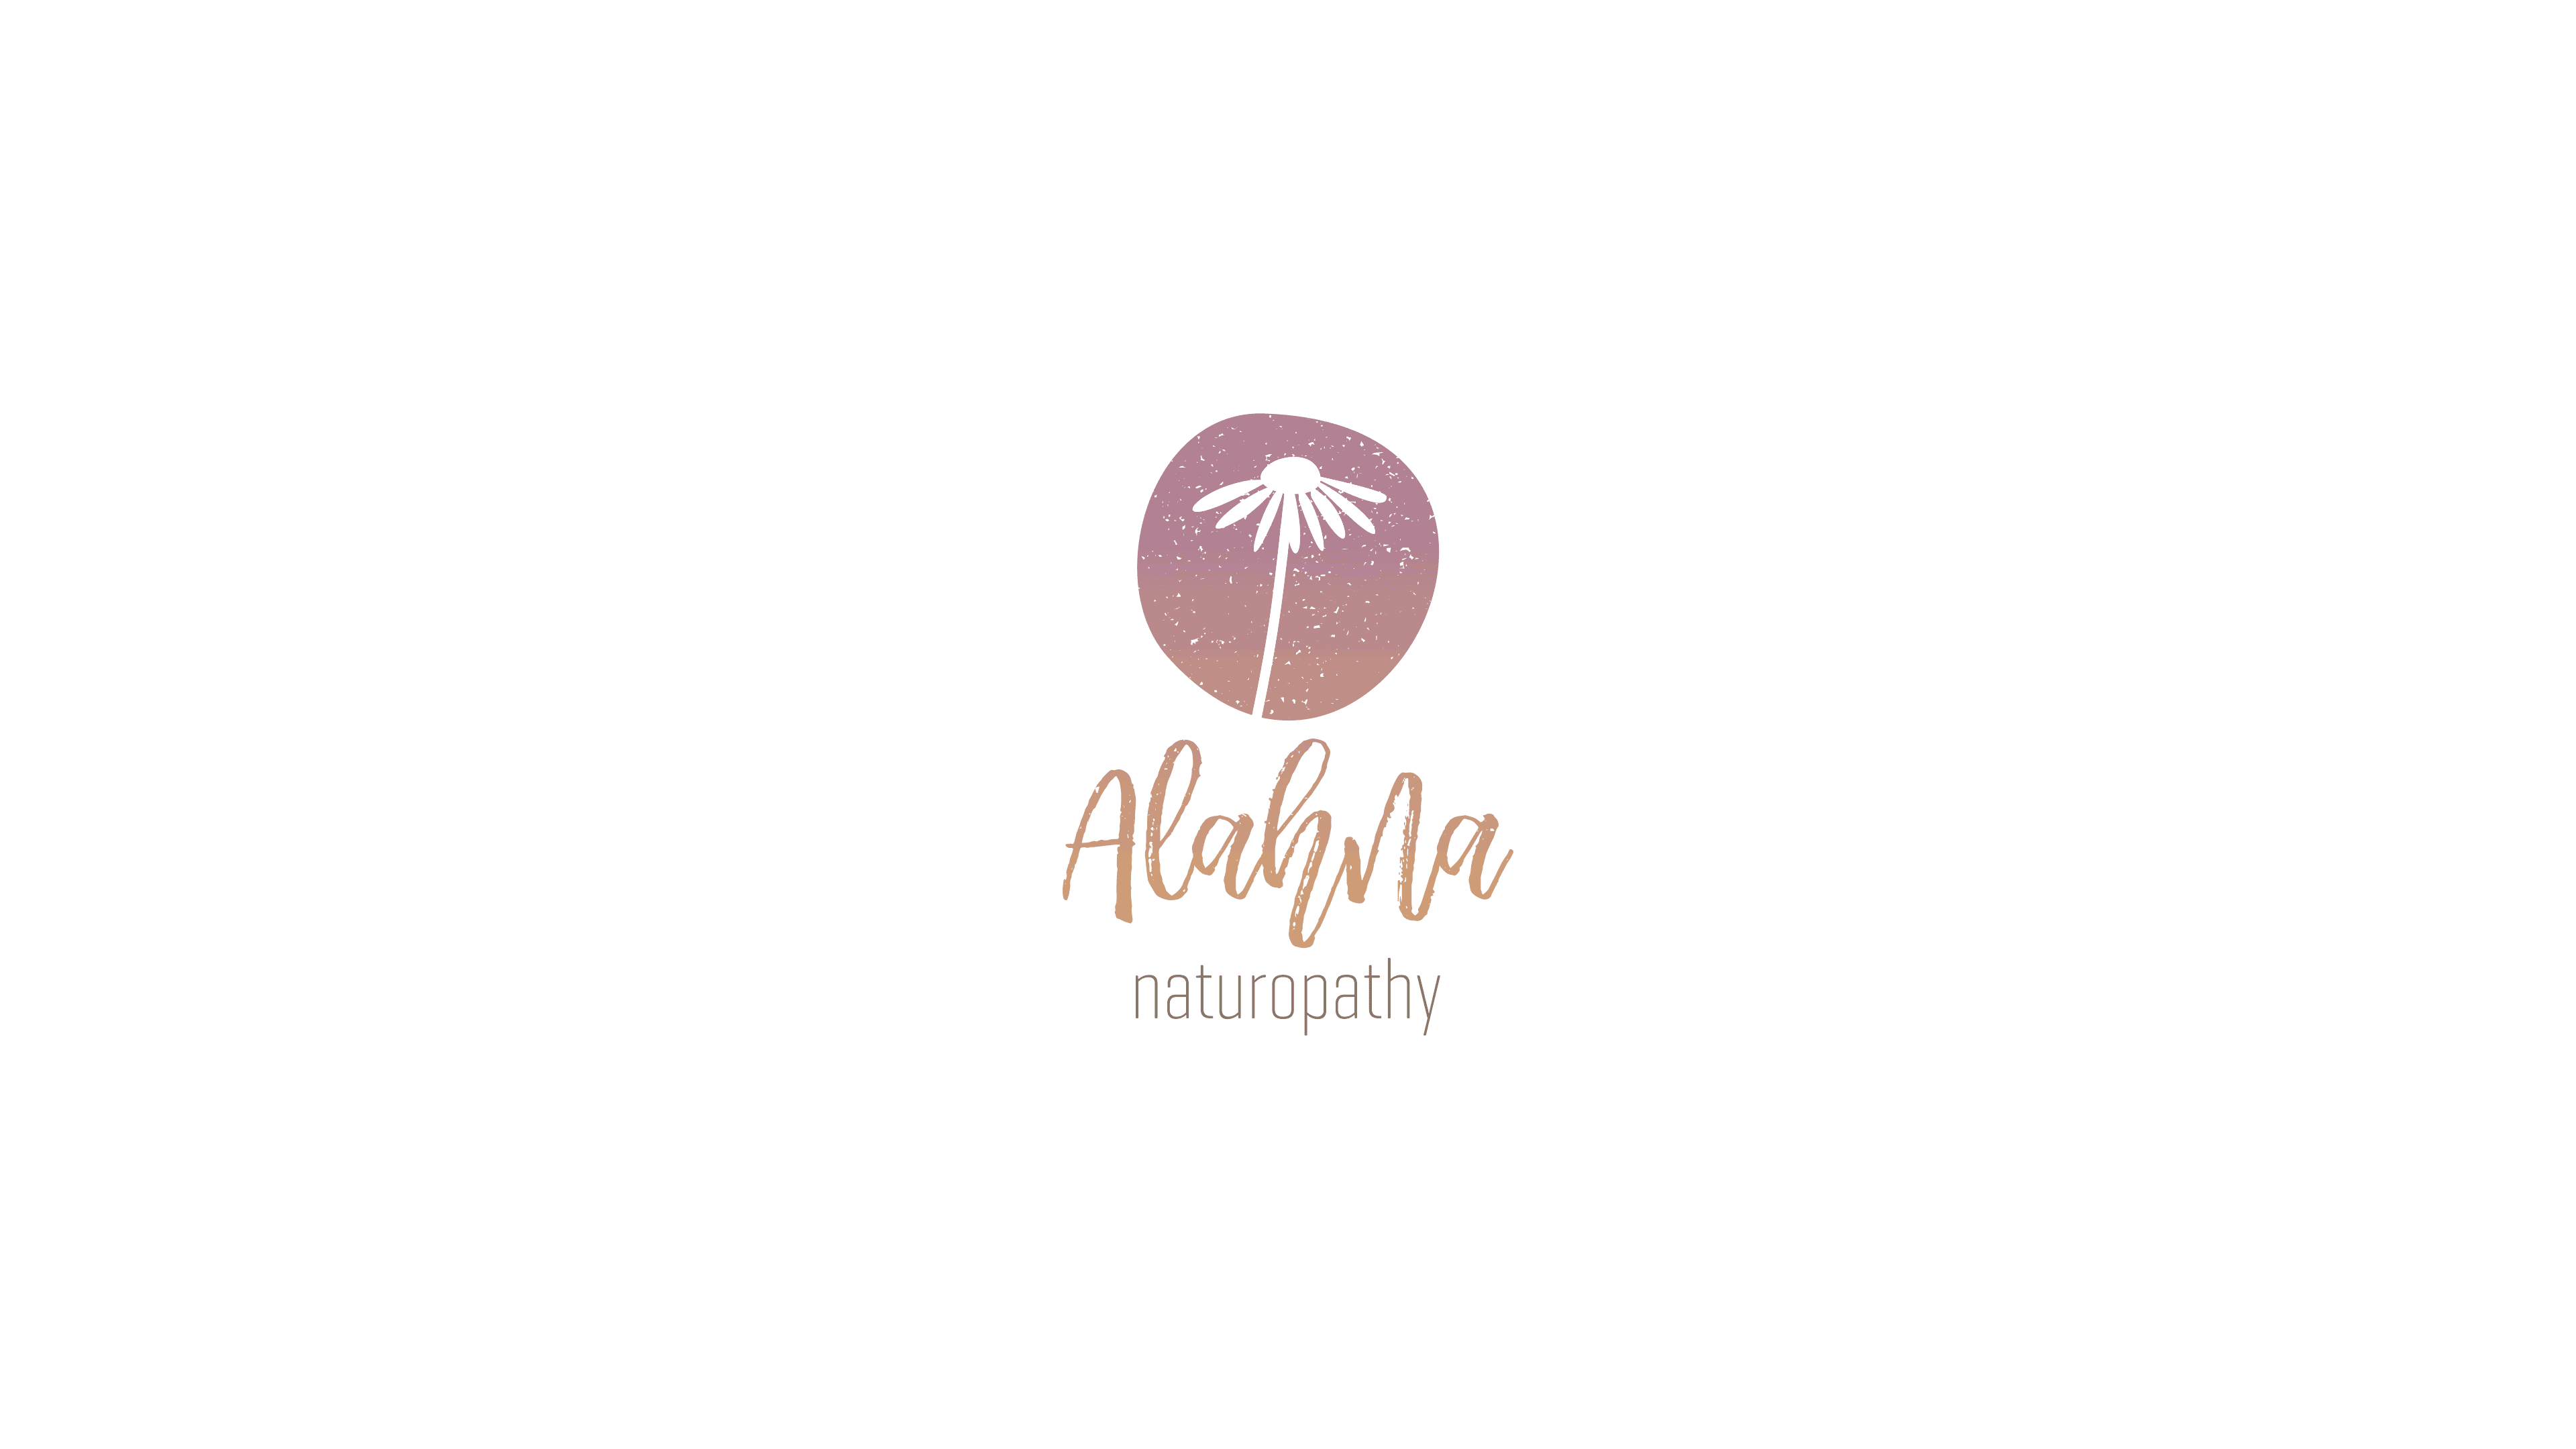 Alahna naturopathy logo